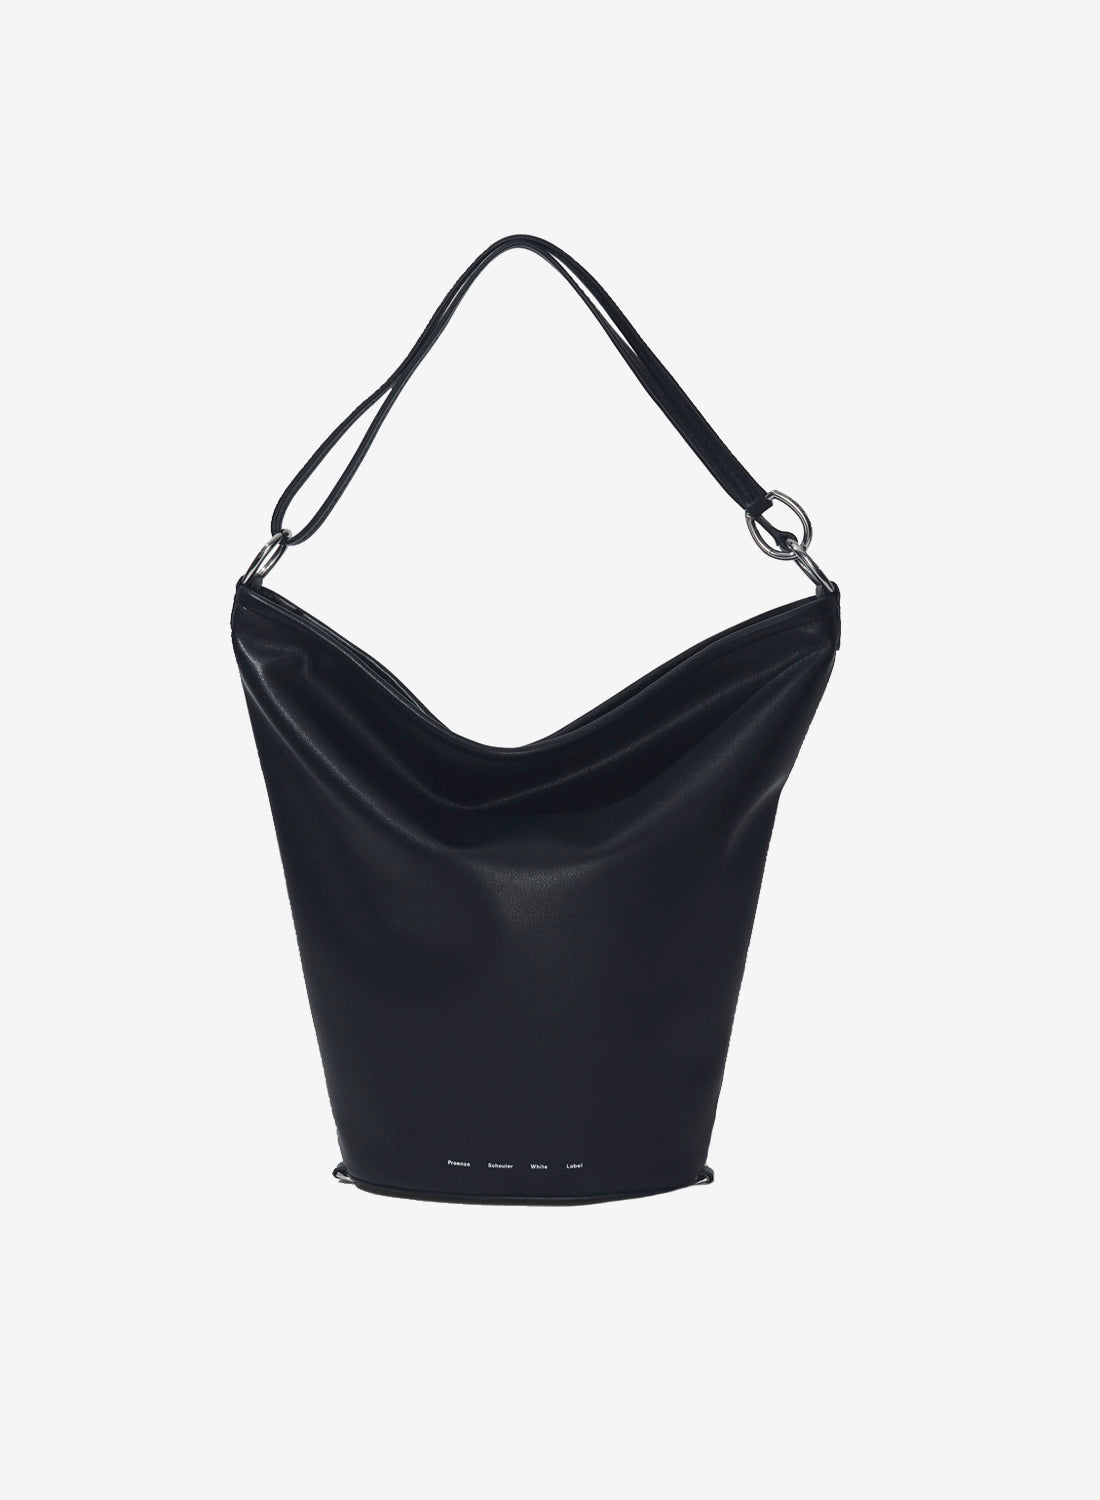 Proenza Schouler White Label Spring Bucket Bag In Leather Black